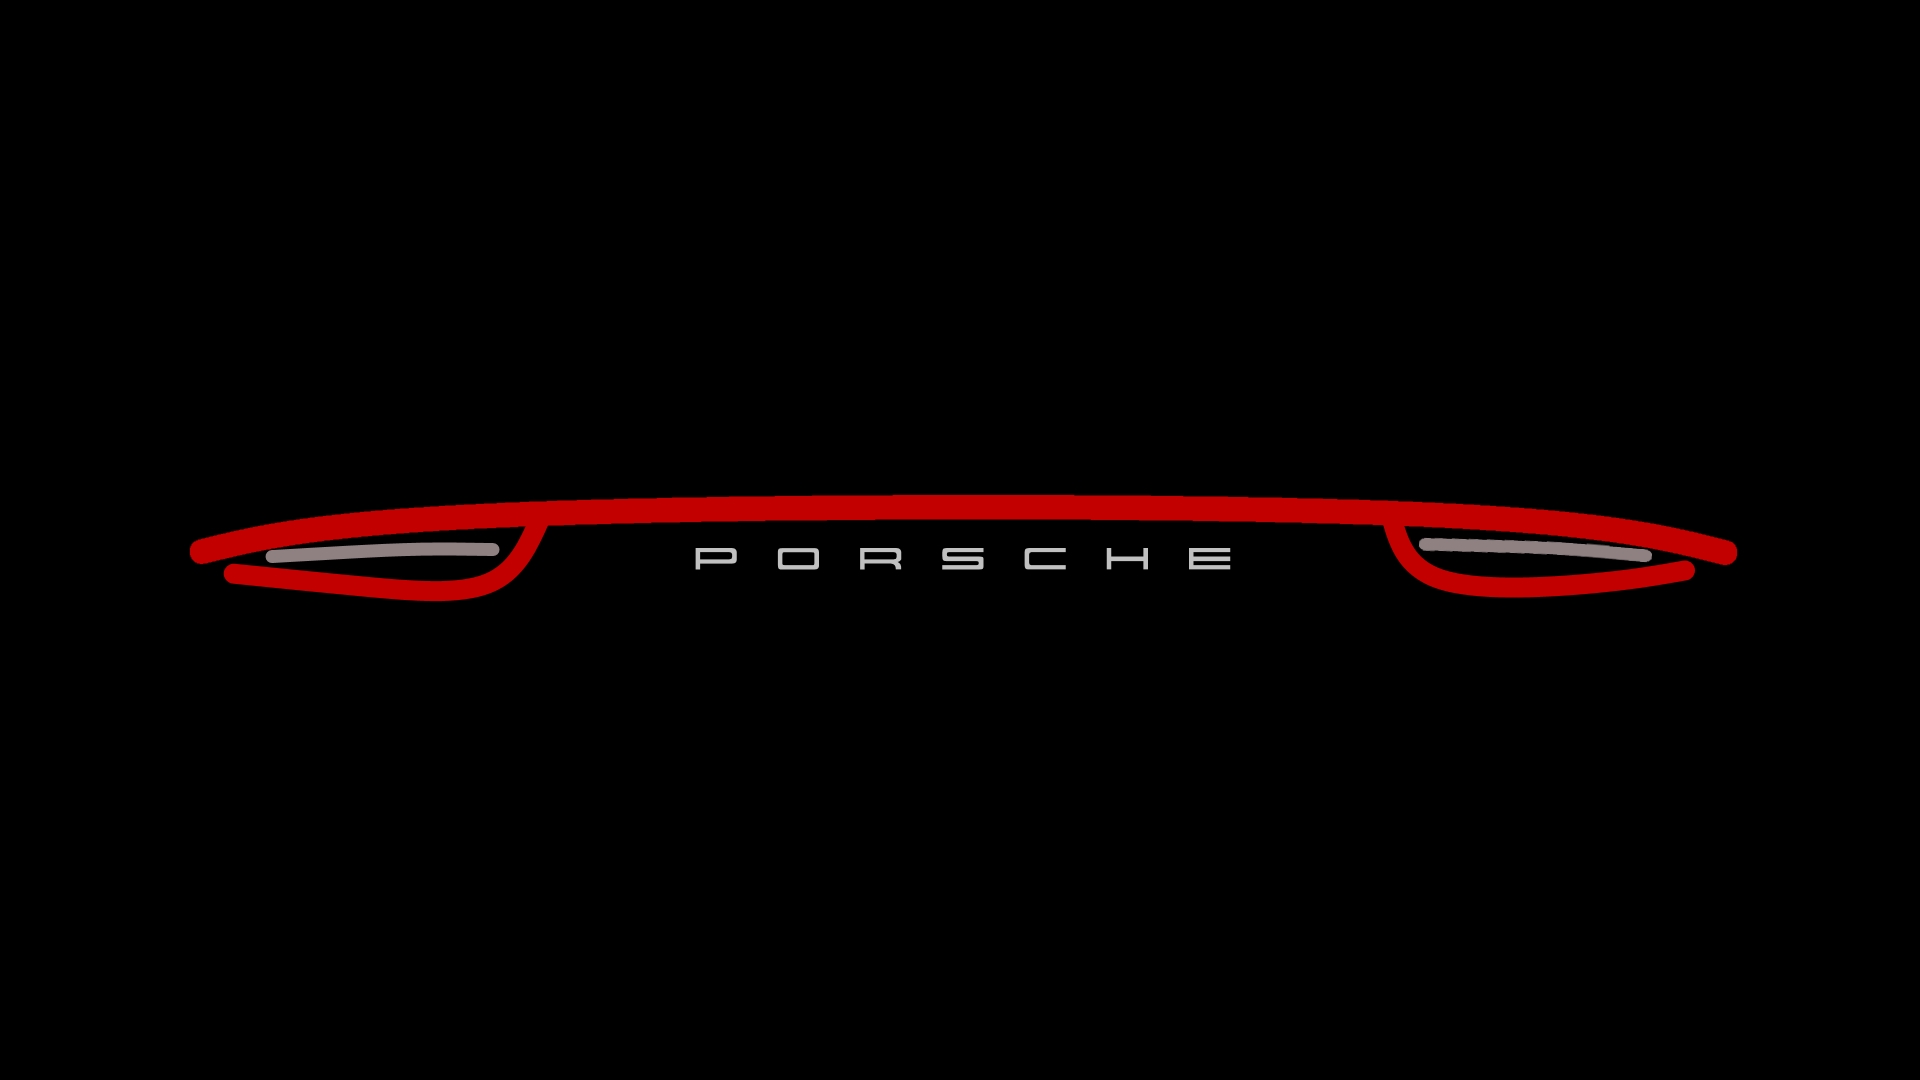 Porsche Taillights Wallpaper By Cornelisj12